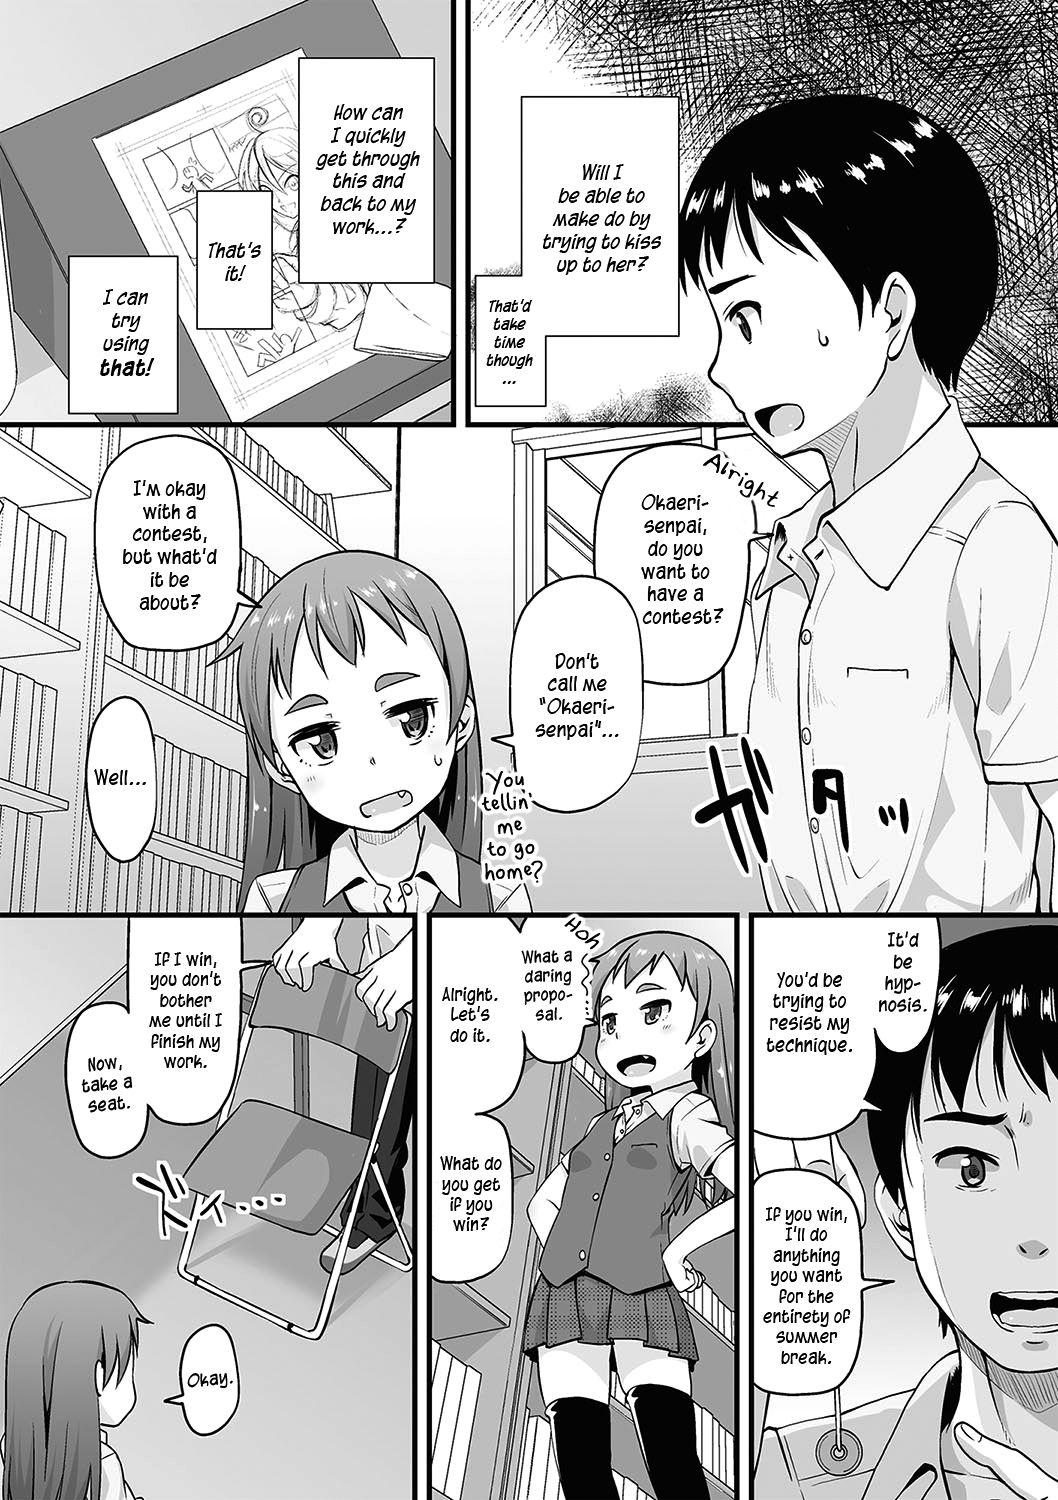 Manga Club Activity Log 3